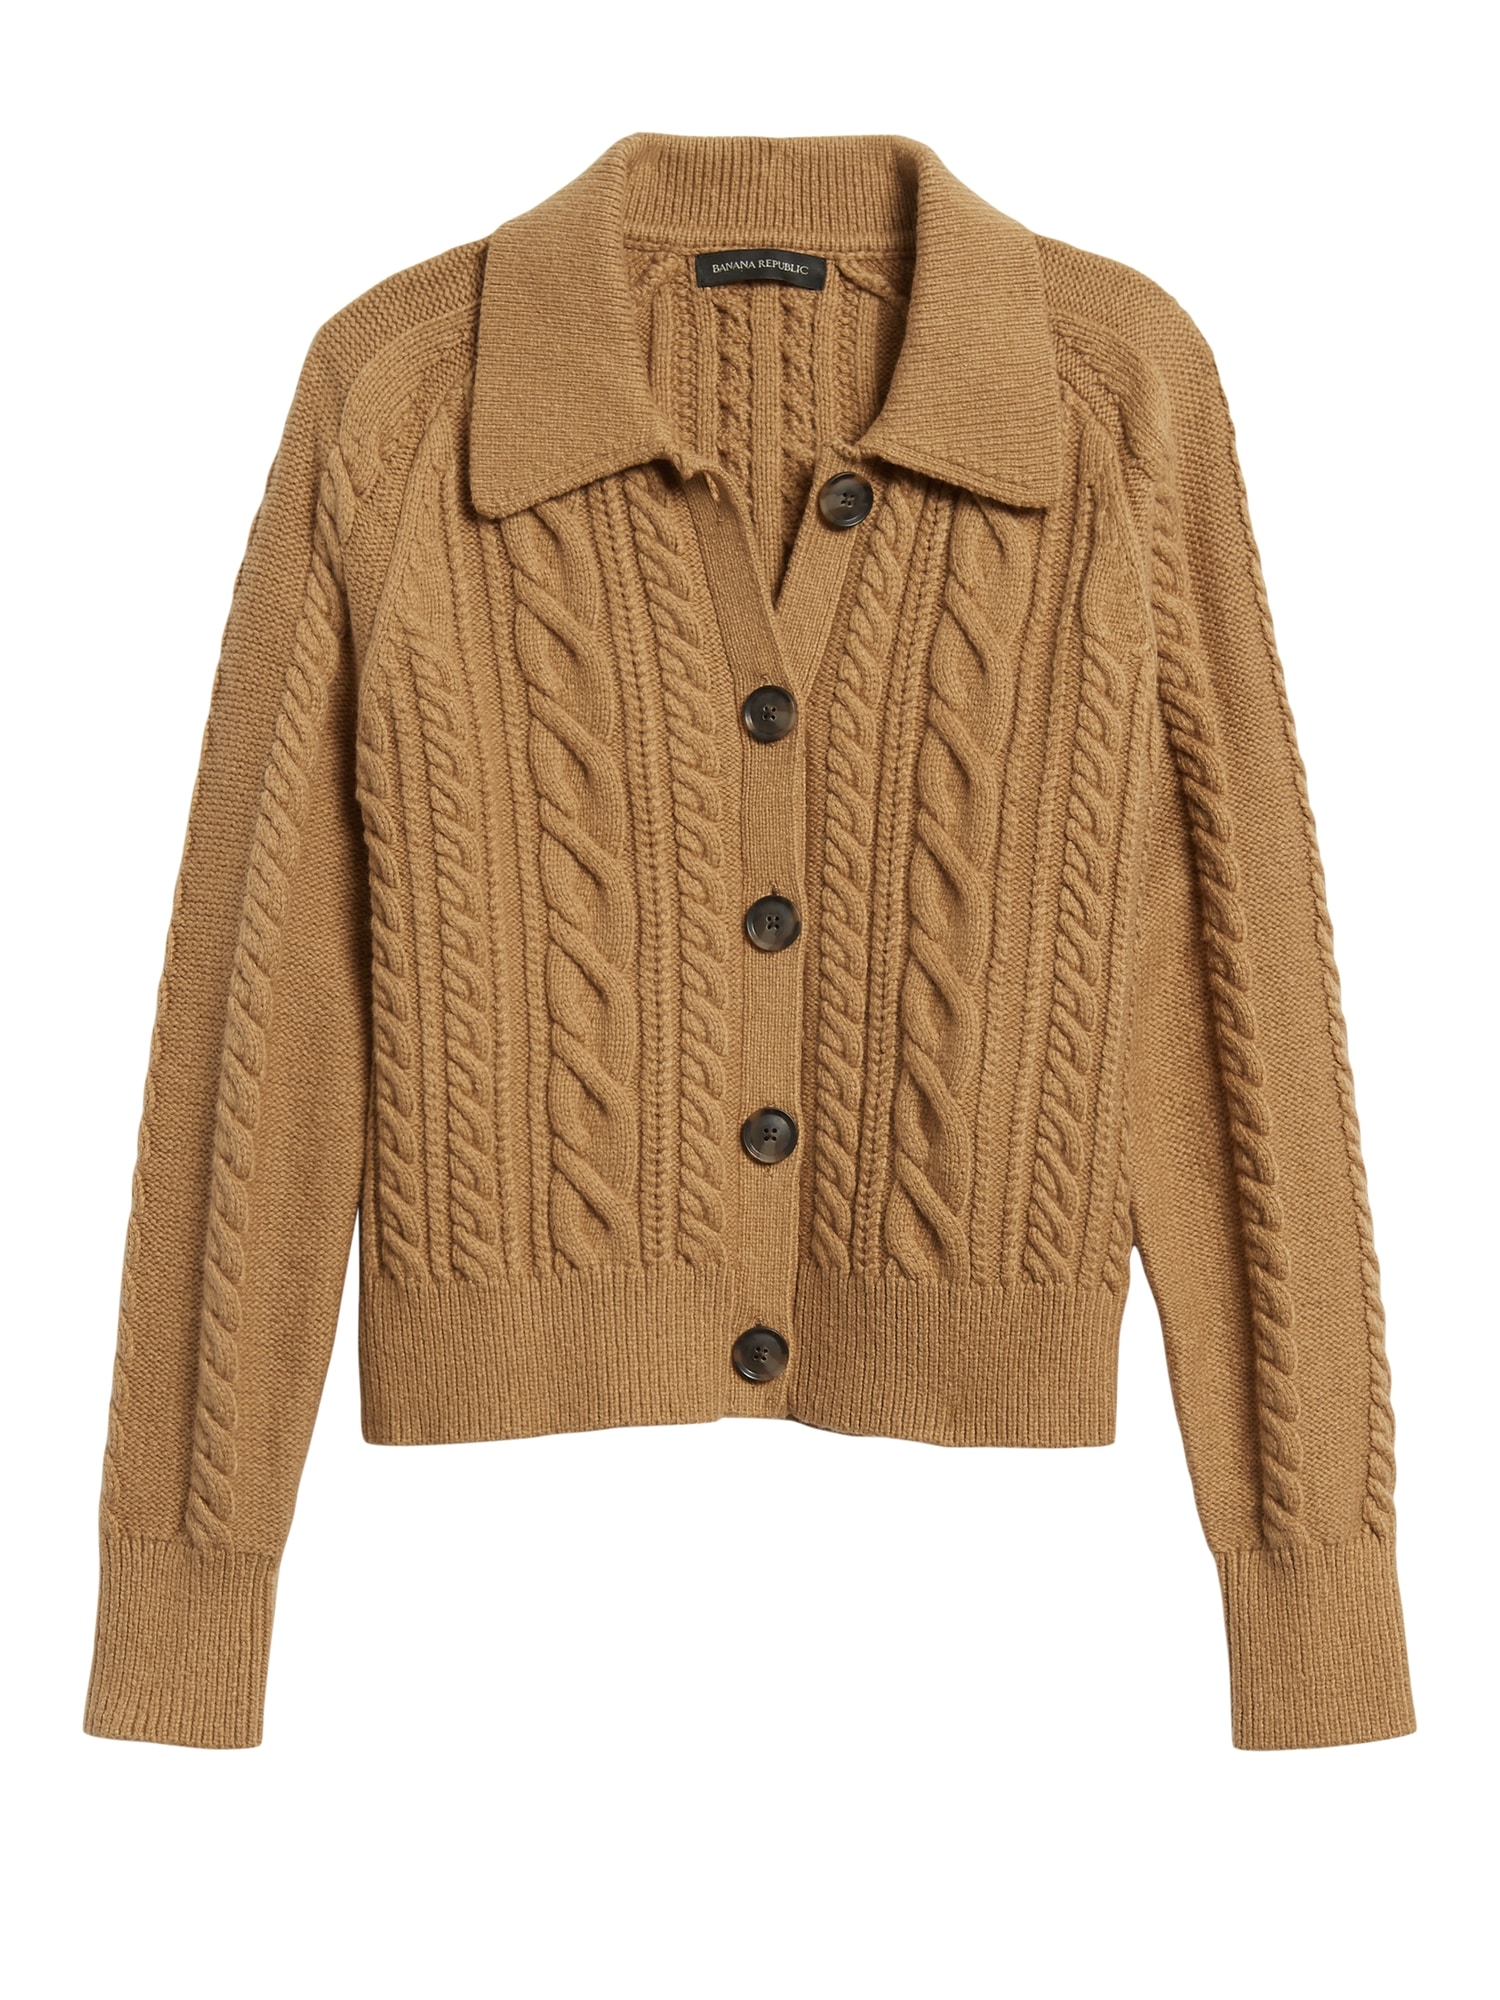 Beige Cardigan Sweater Flash Sales, 52% OFF | www.ingeniovirtual.com